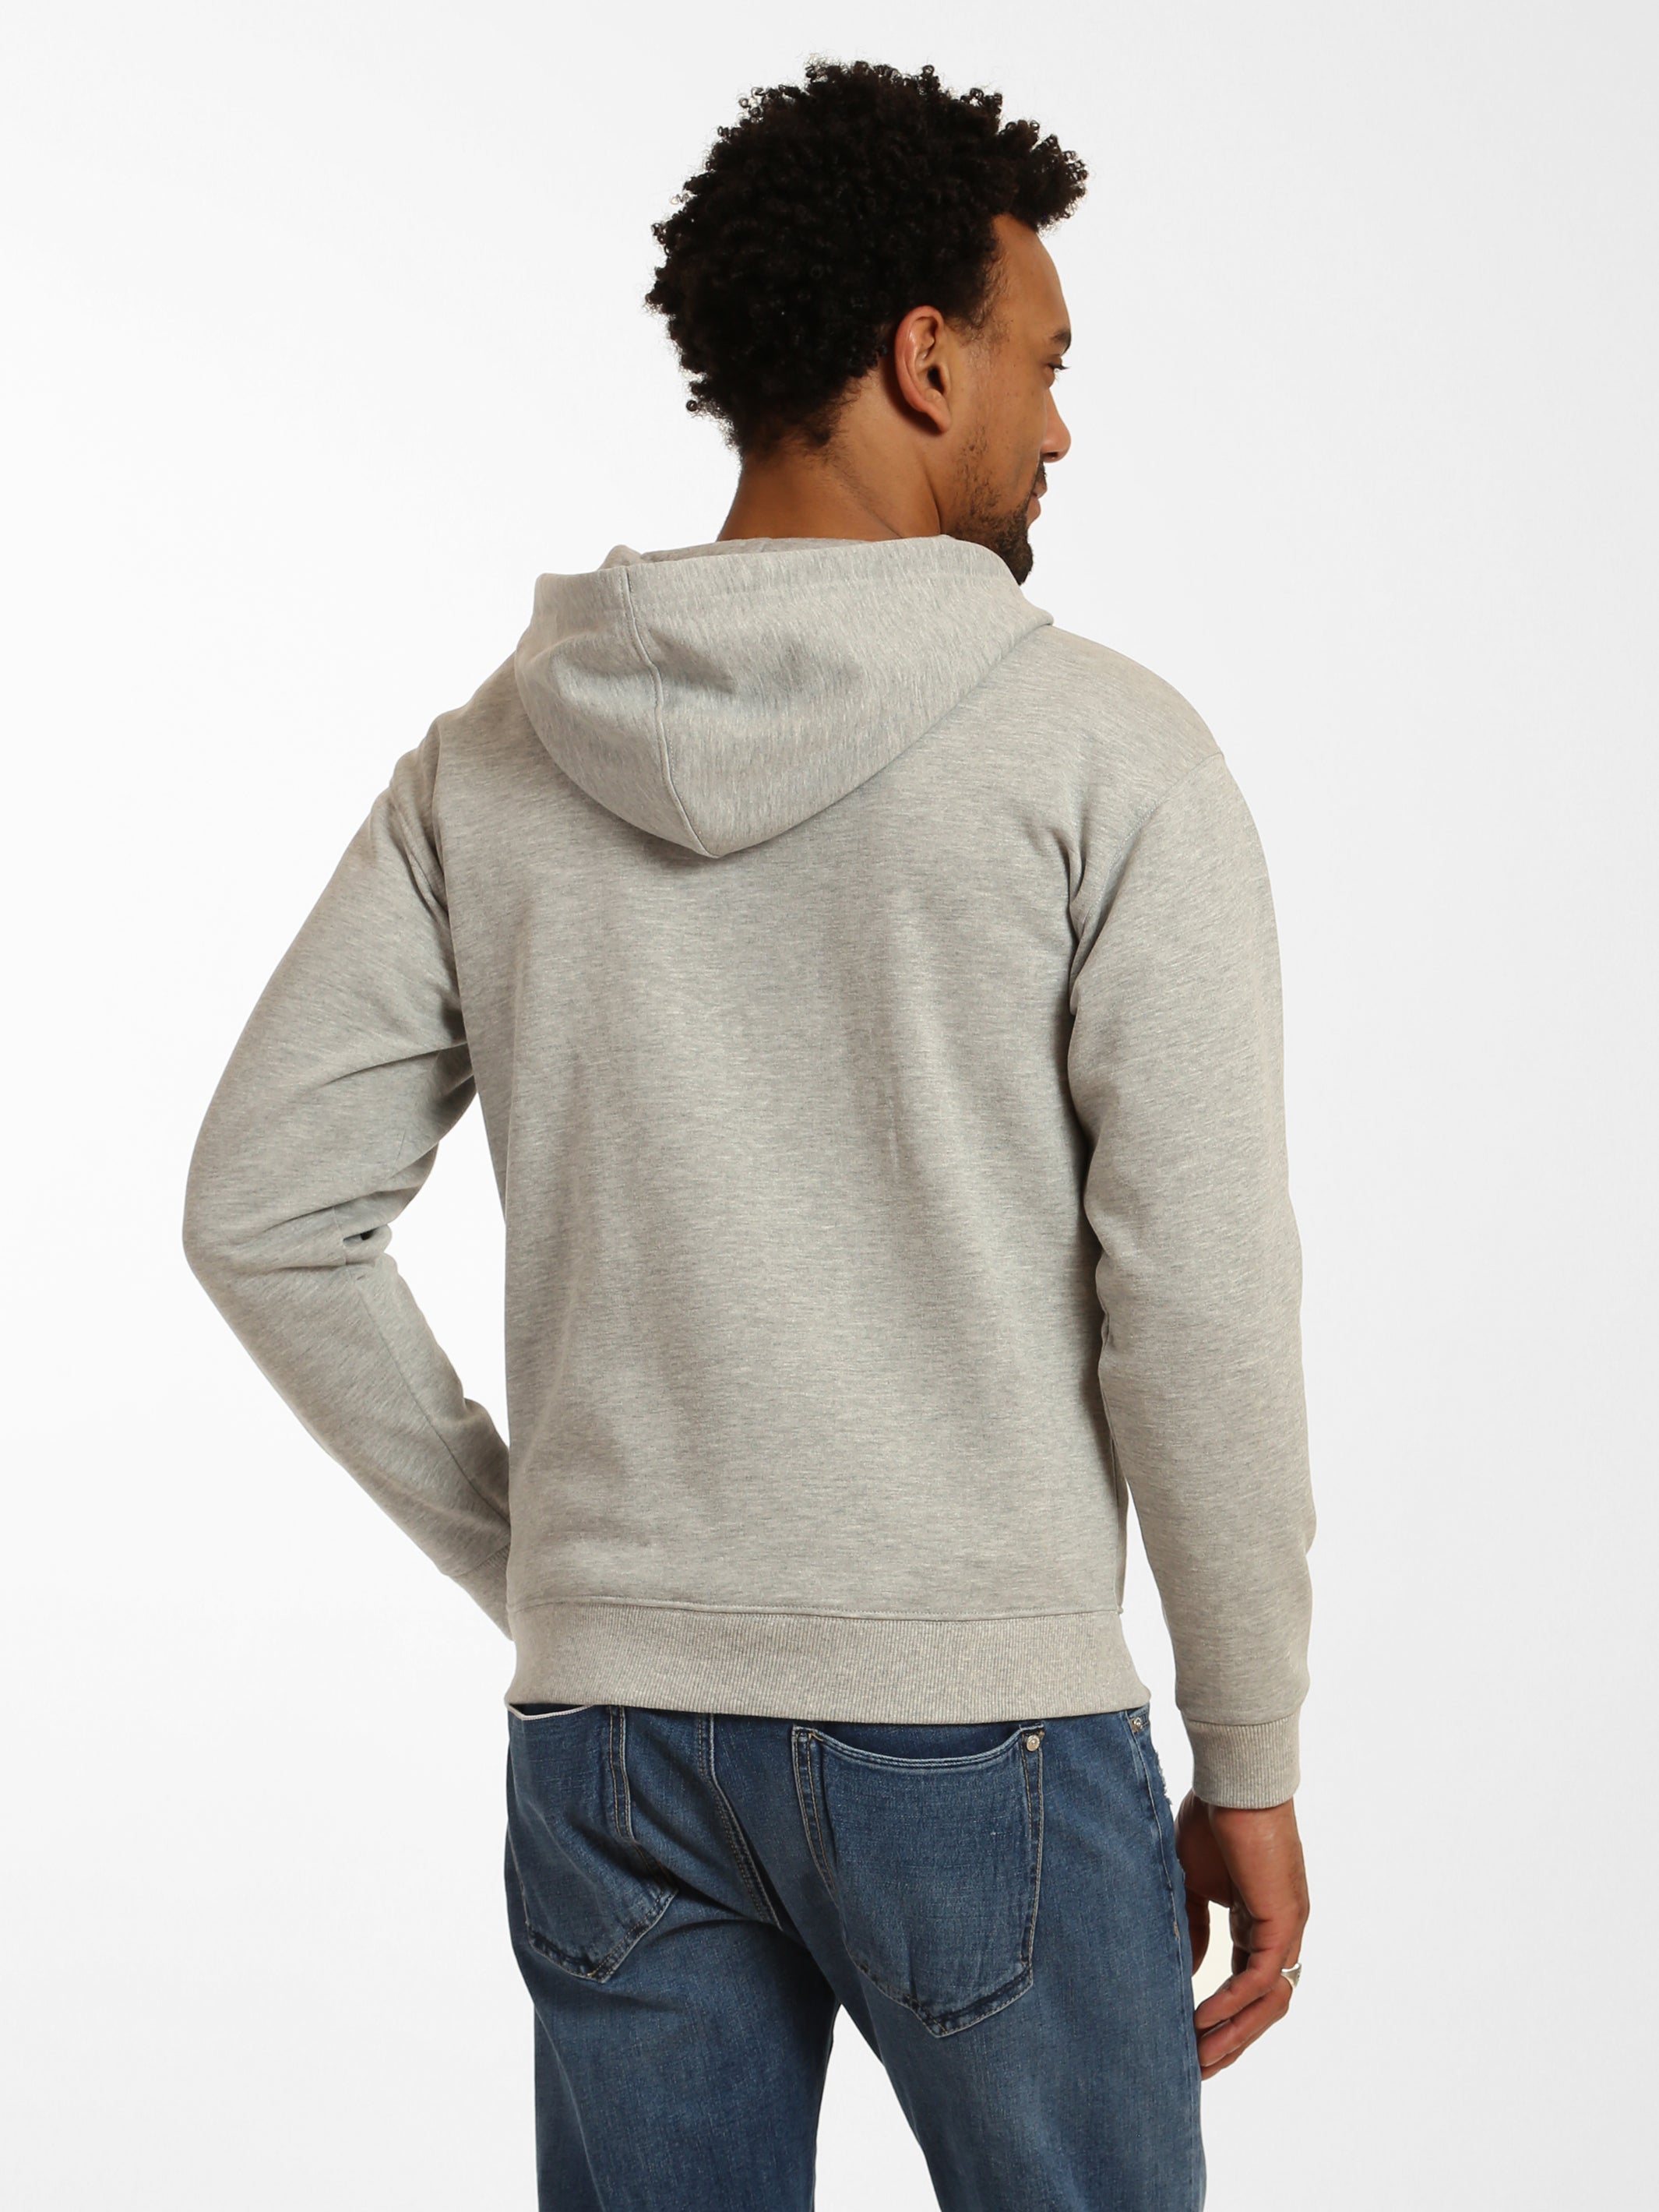 Men's Sale on T-shirts, Sweats, Jackets – Brooklyn Industries